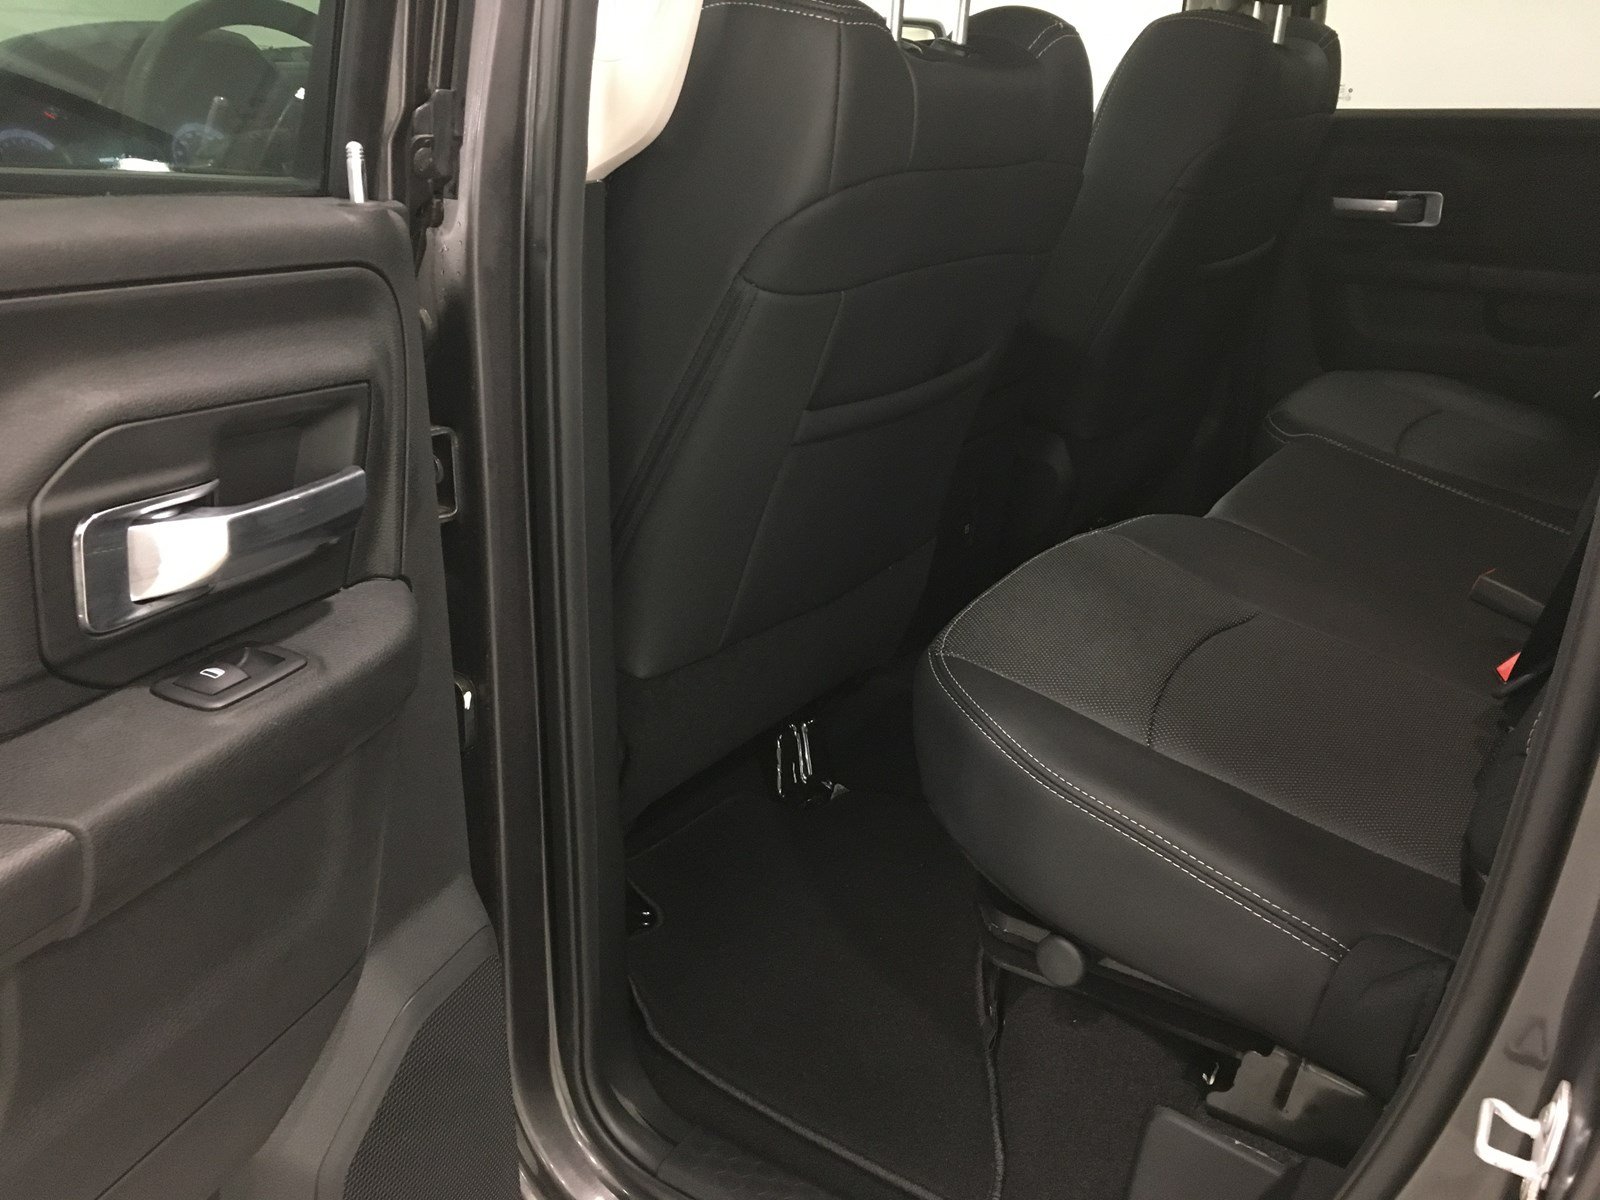 Certified Used 2017 Ram 1500 Laramie Quad Cab Ventilated Seats Sunroof Remote Start Quad